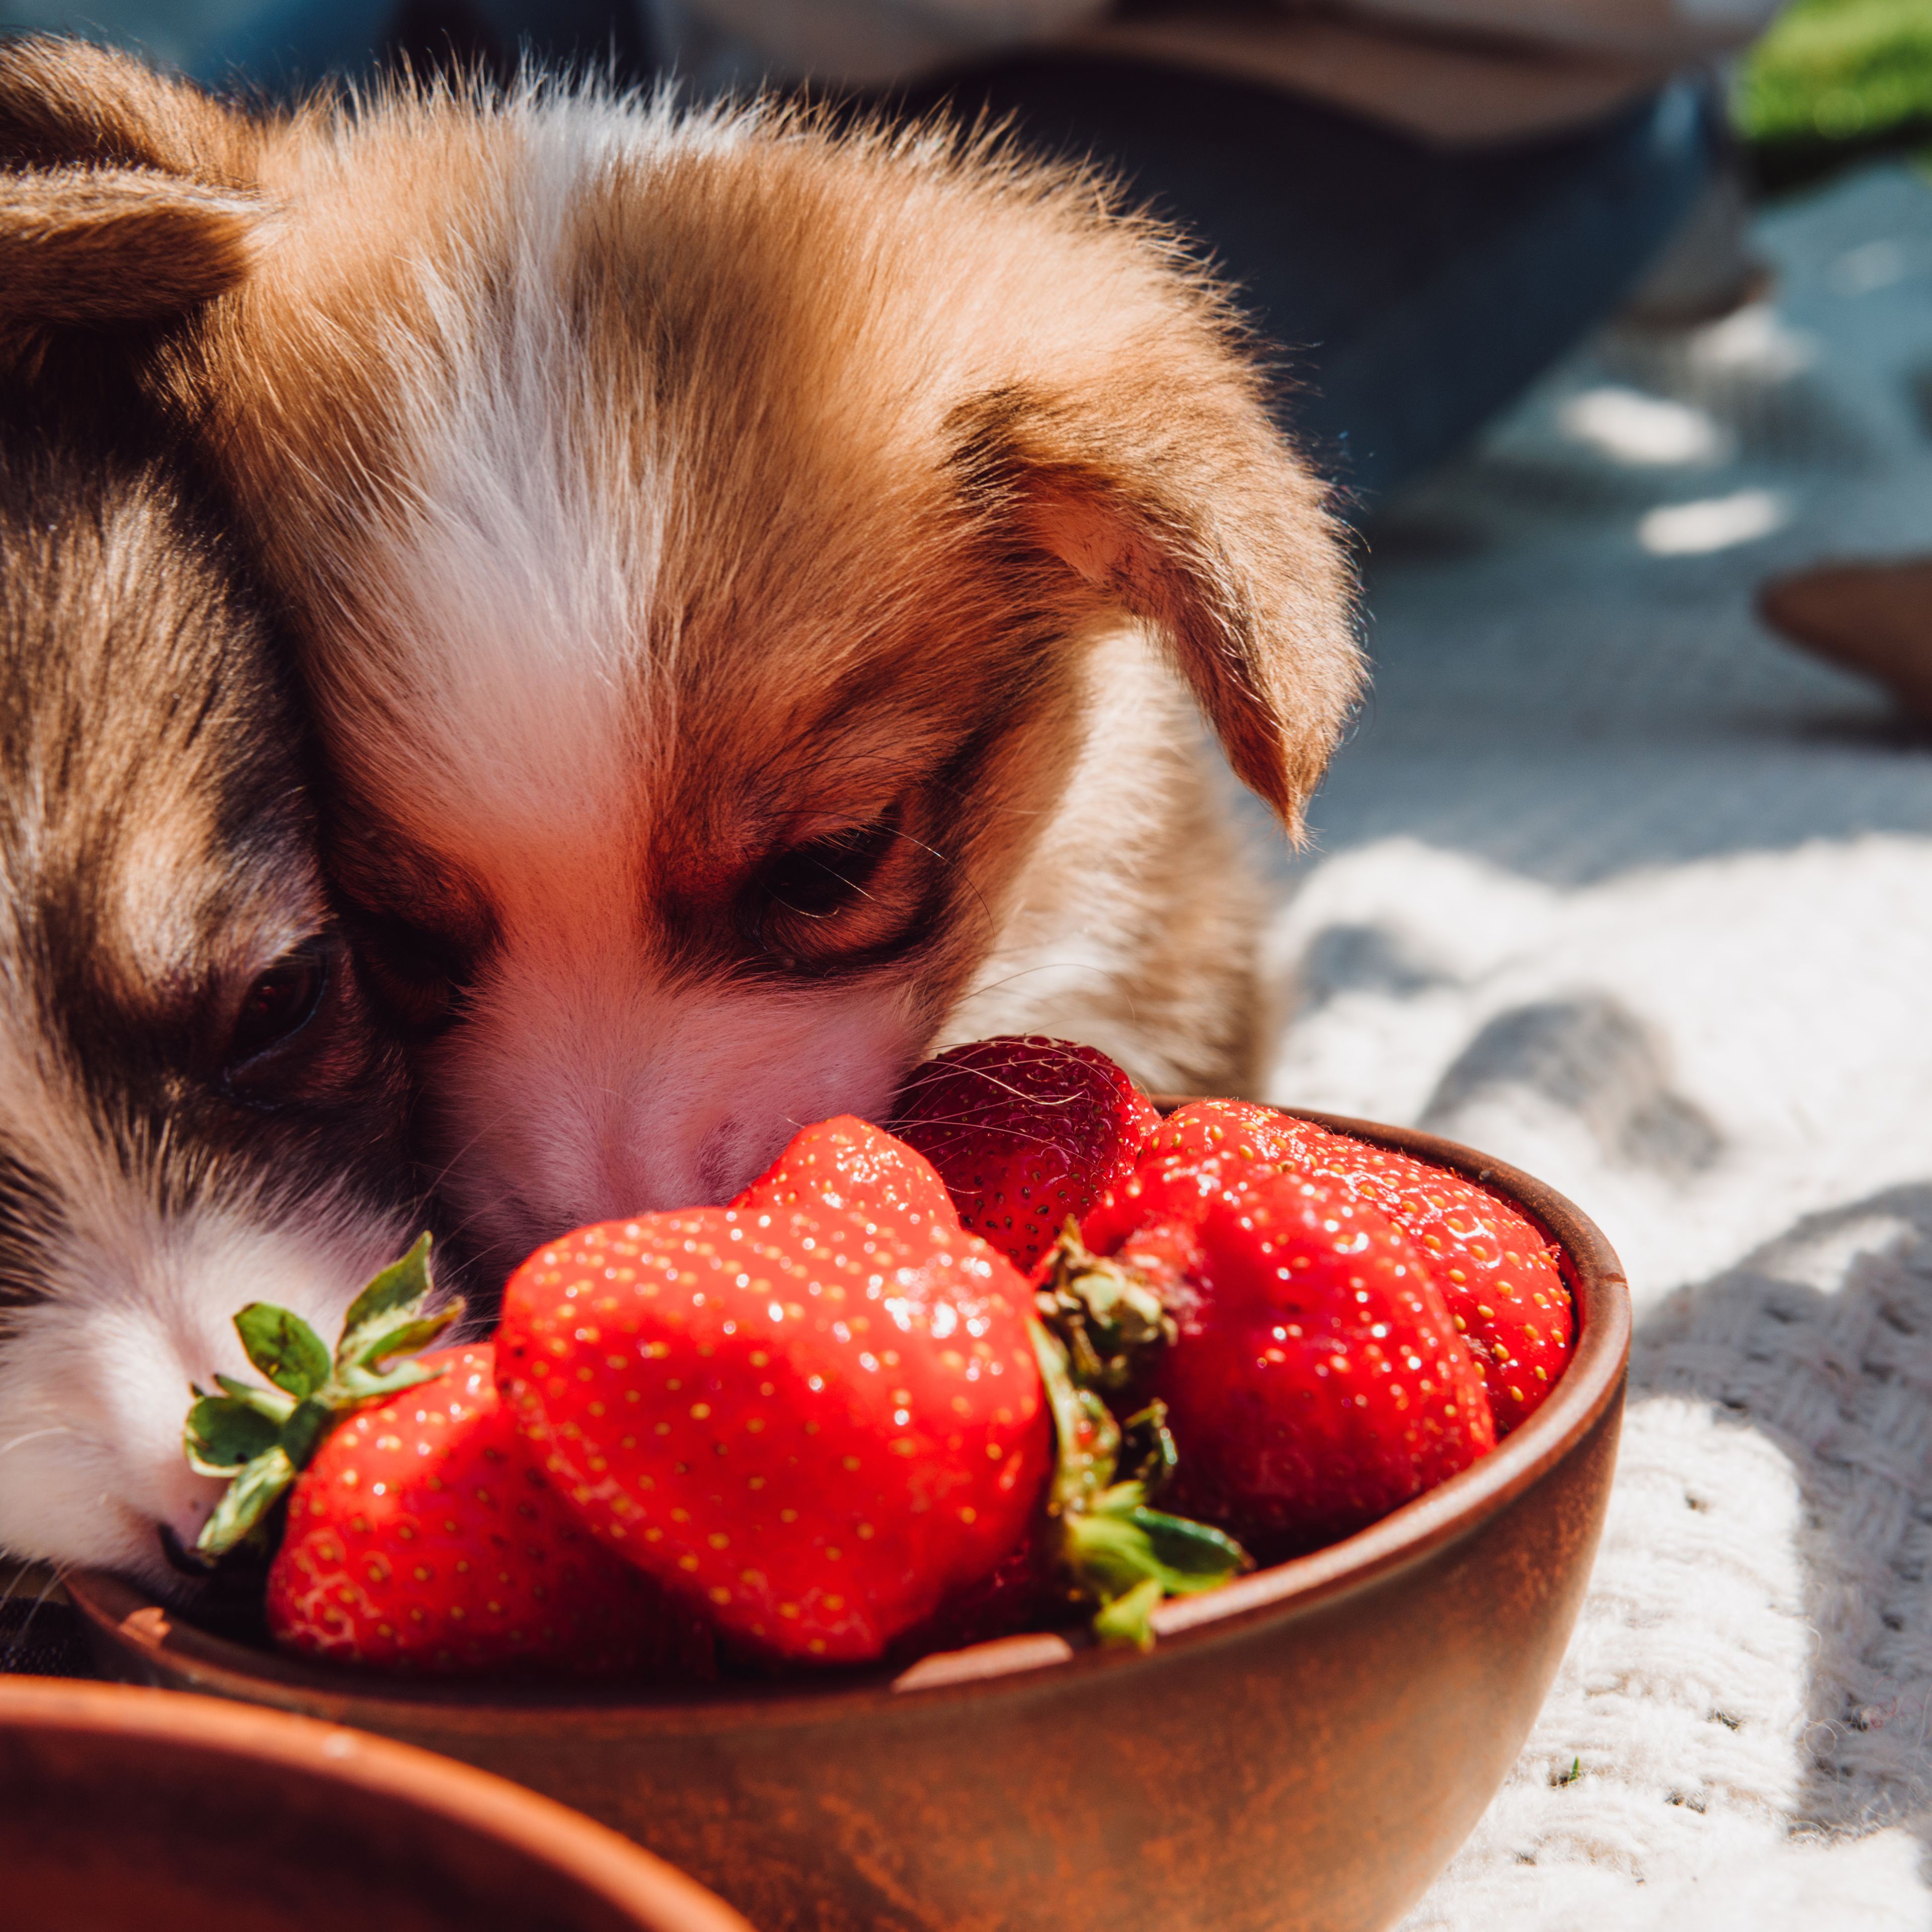 cuccioli mangiano le fragole